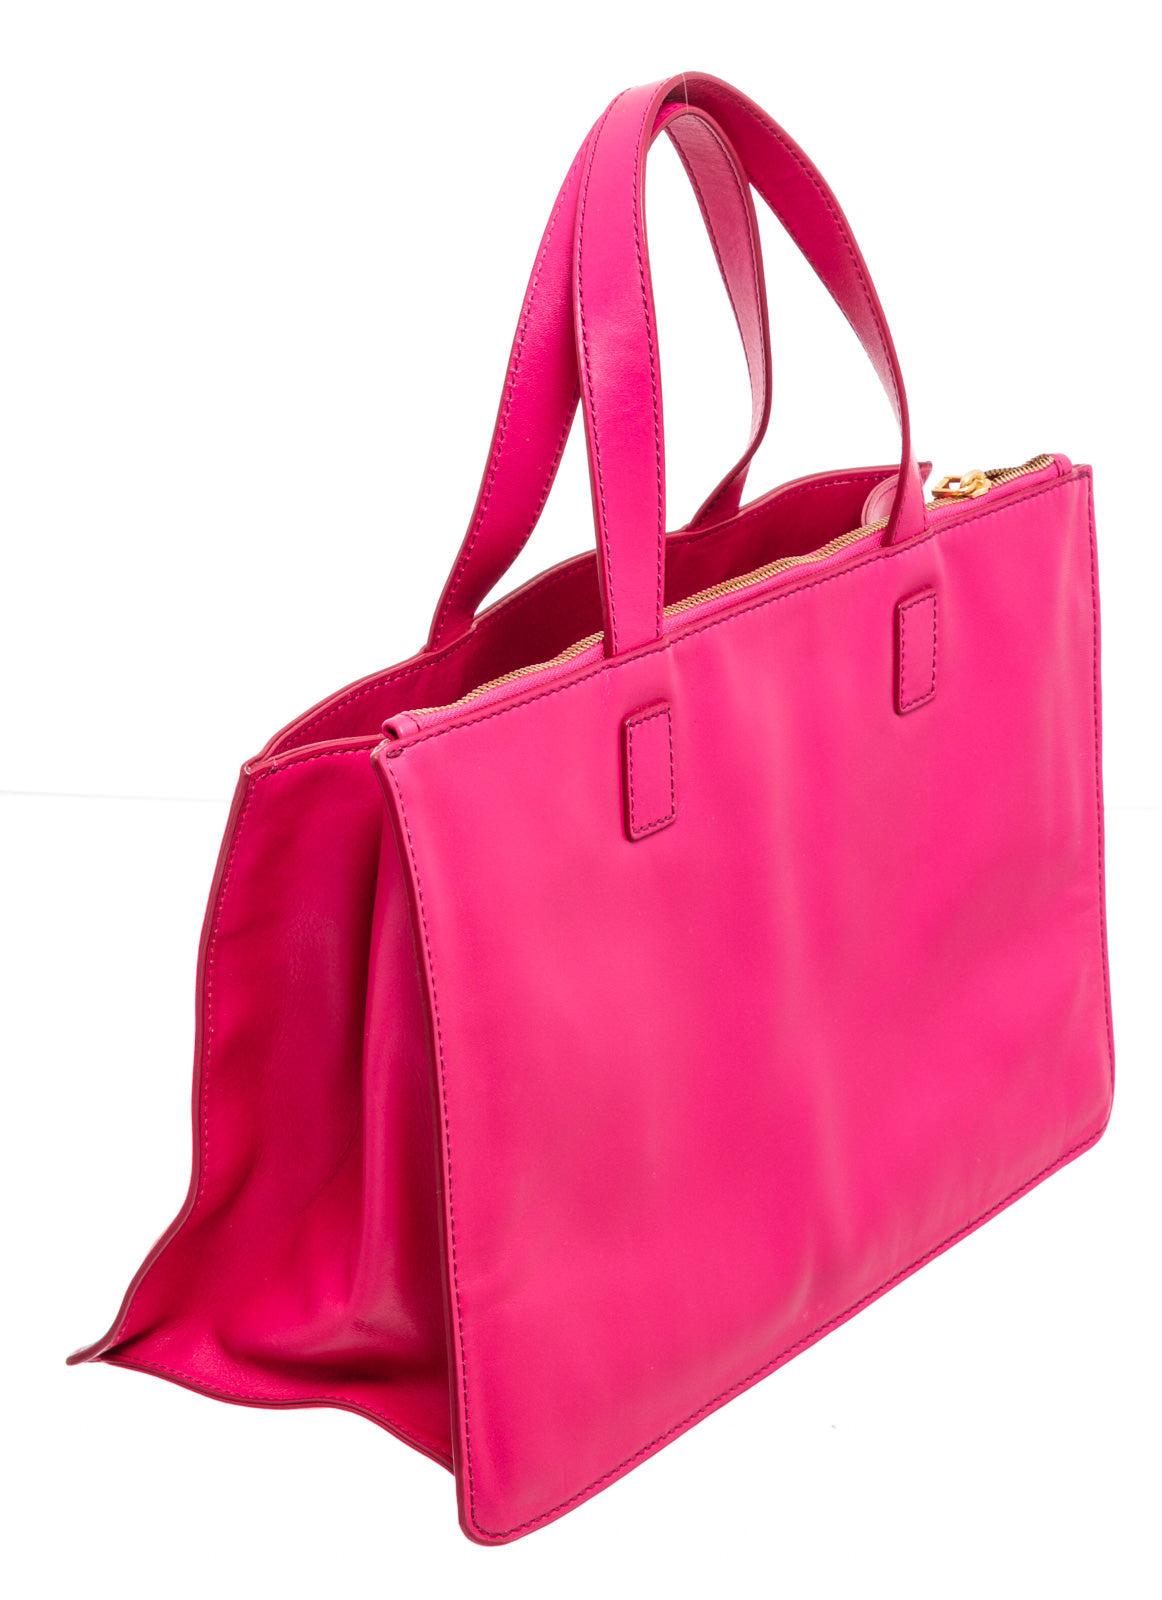 marc jacobs pink tote bag